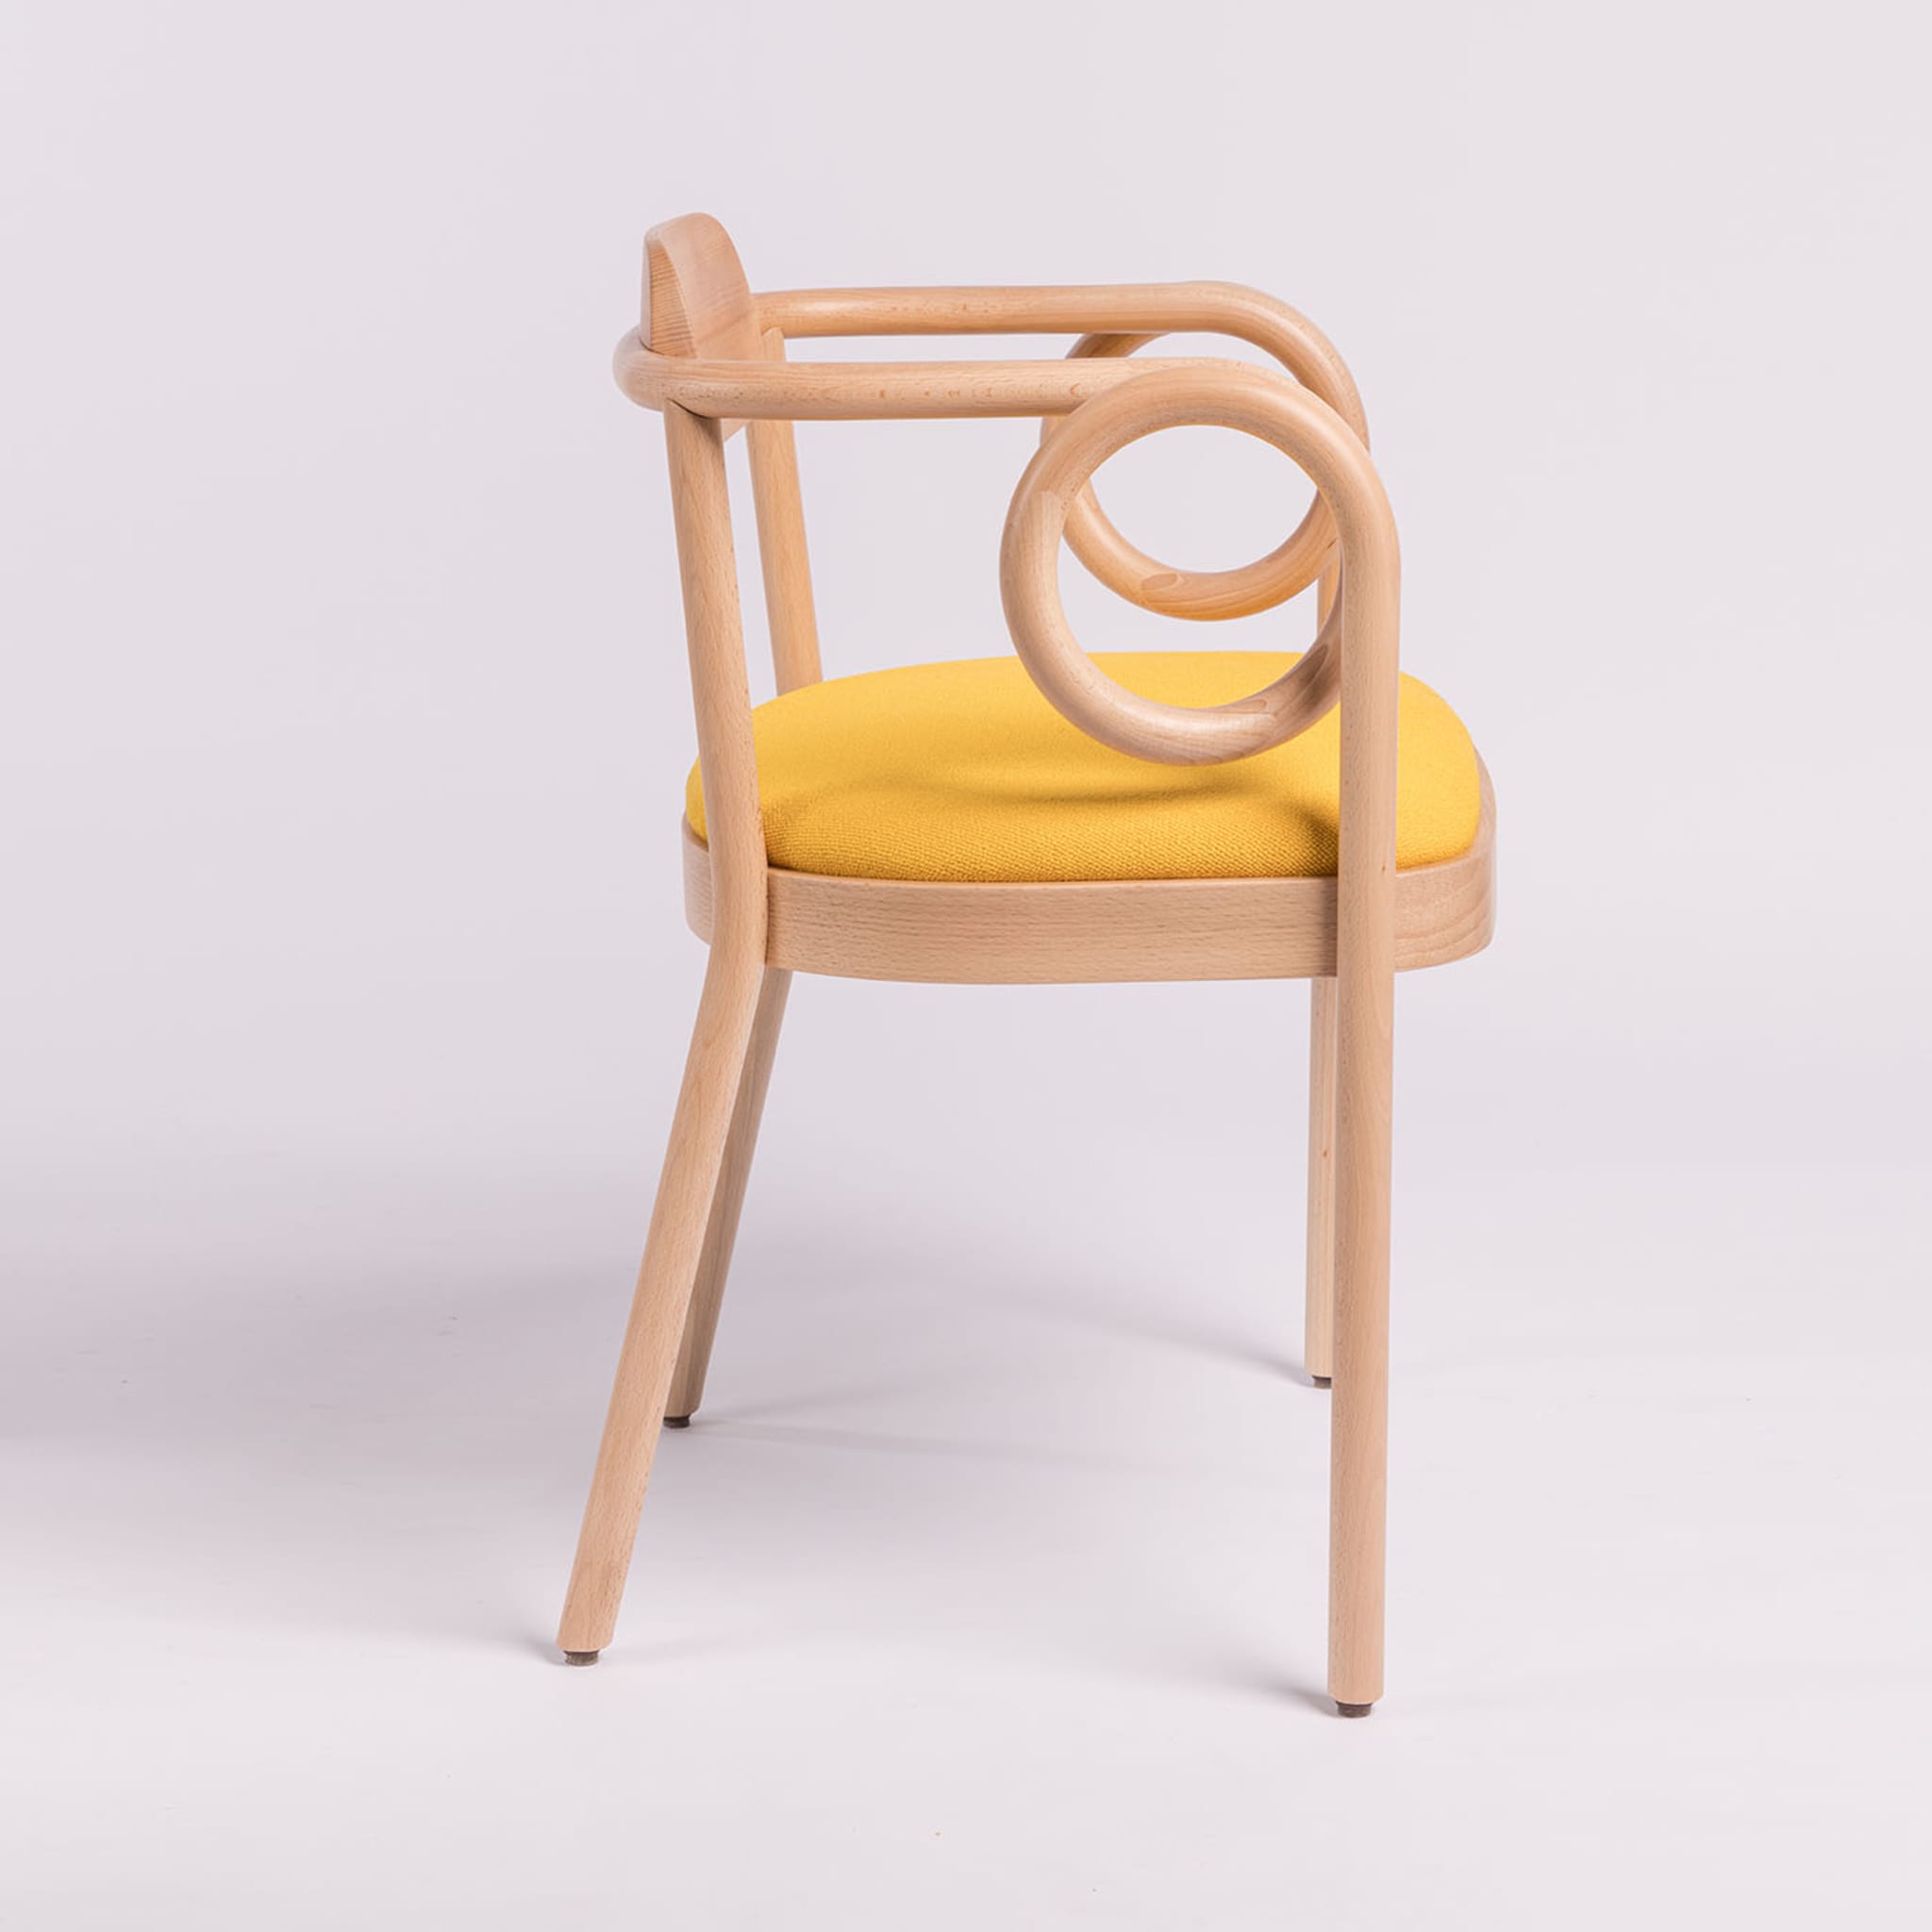 Loop Dining Chair by India Mahdavi - Alternative view 2